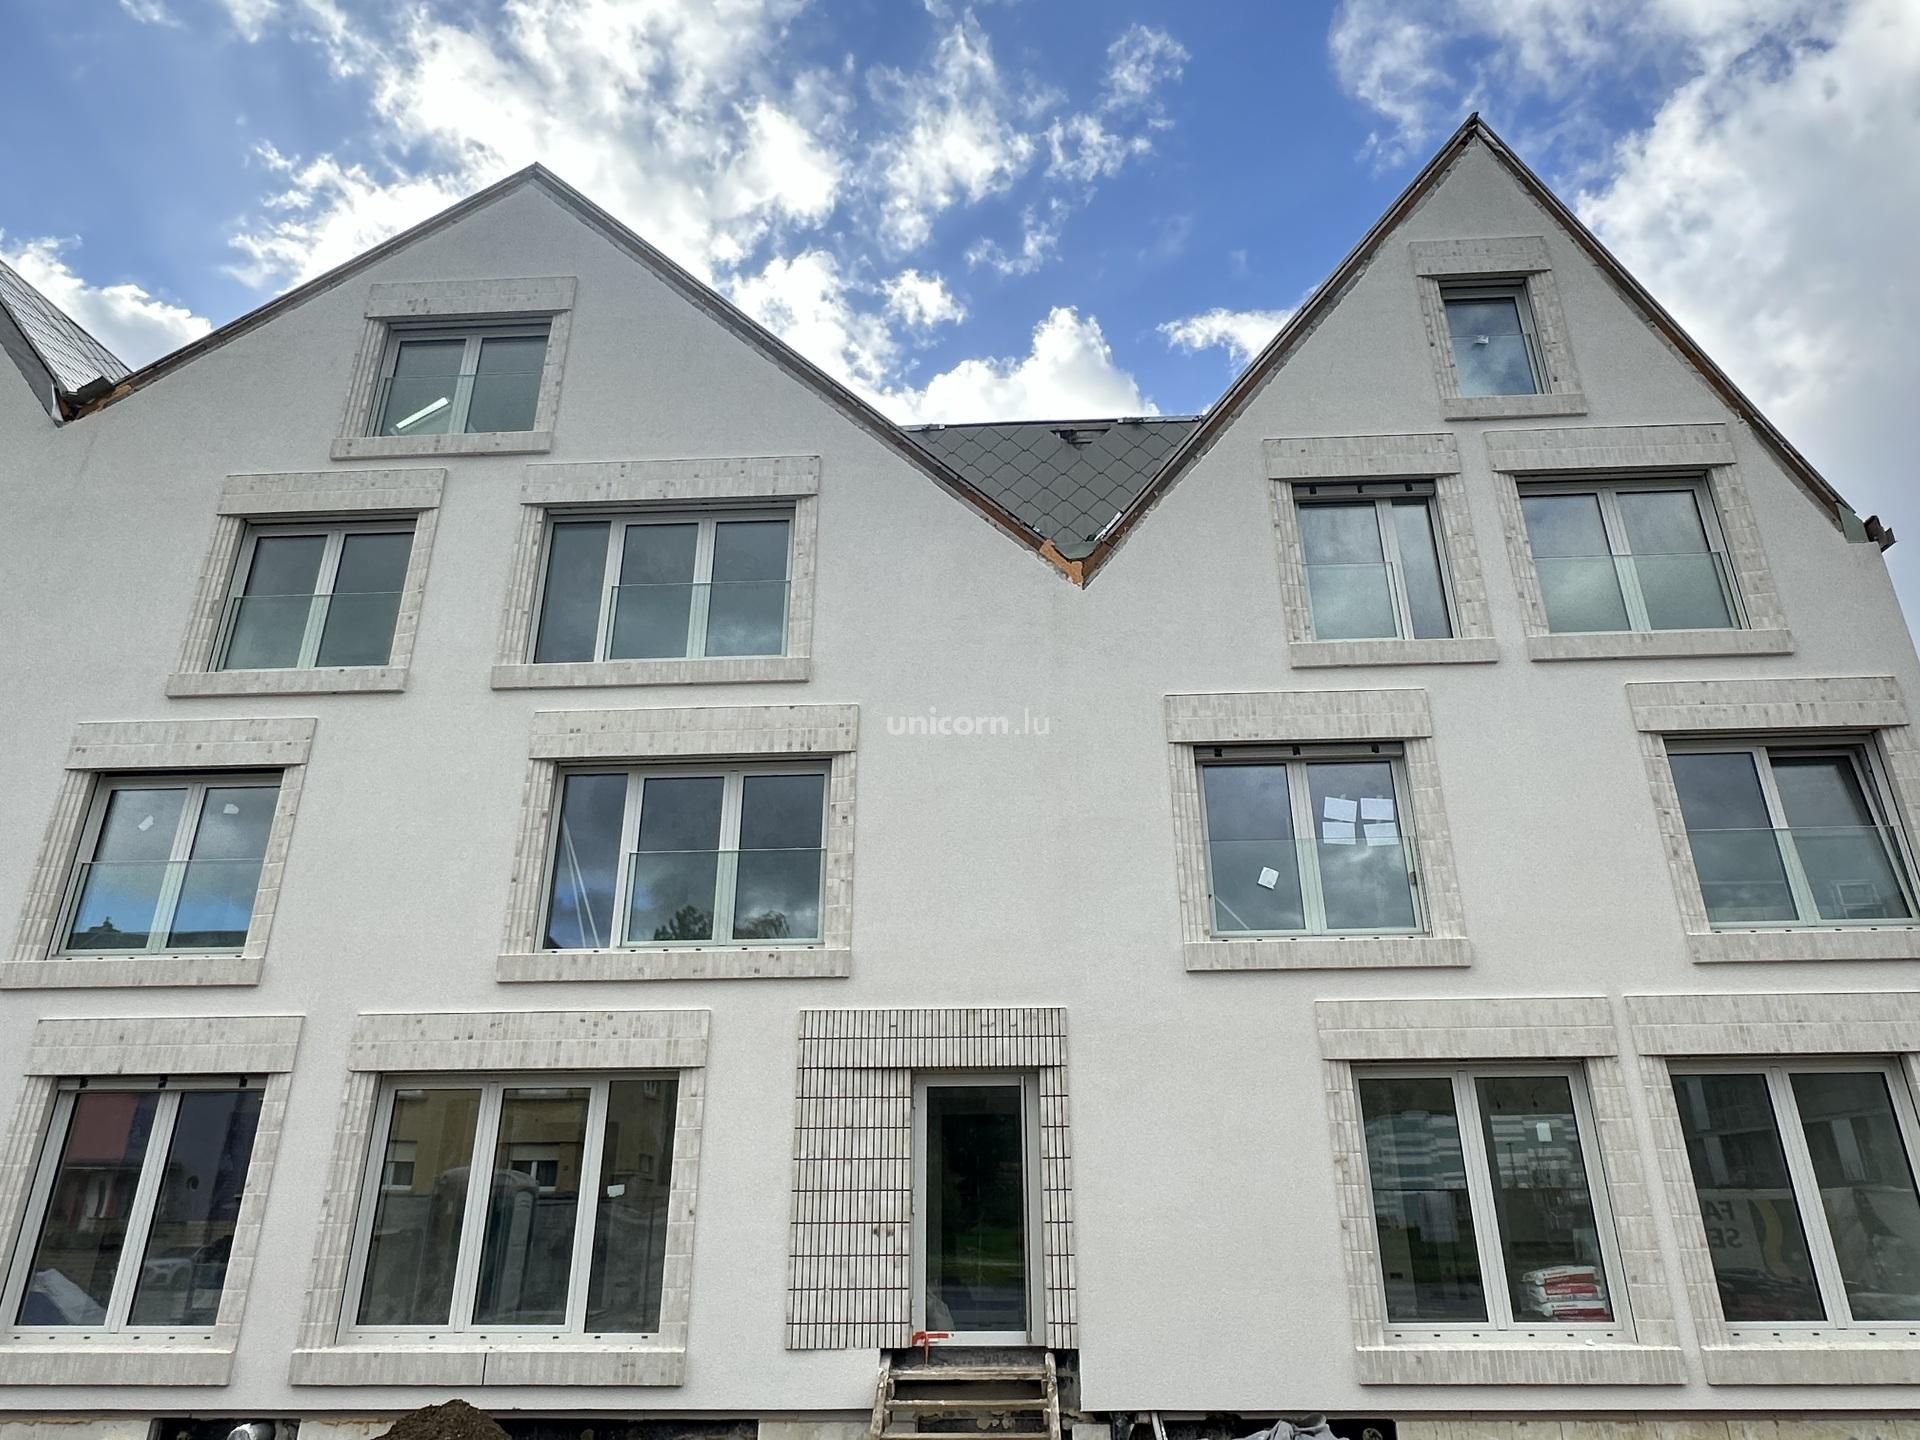 Appartement en vente à Walferdange  - 165.81m²